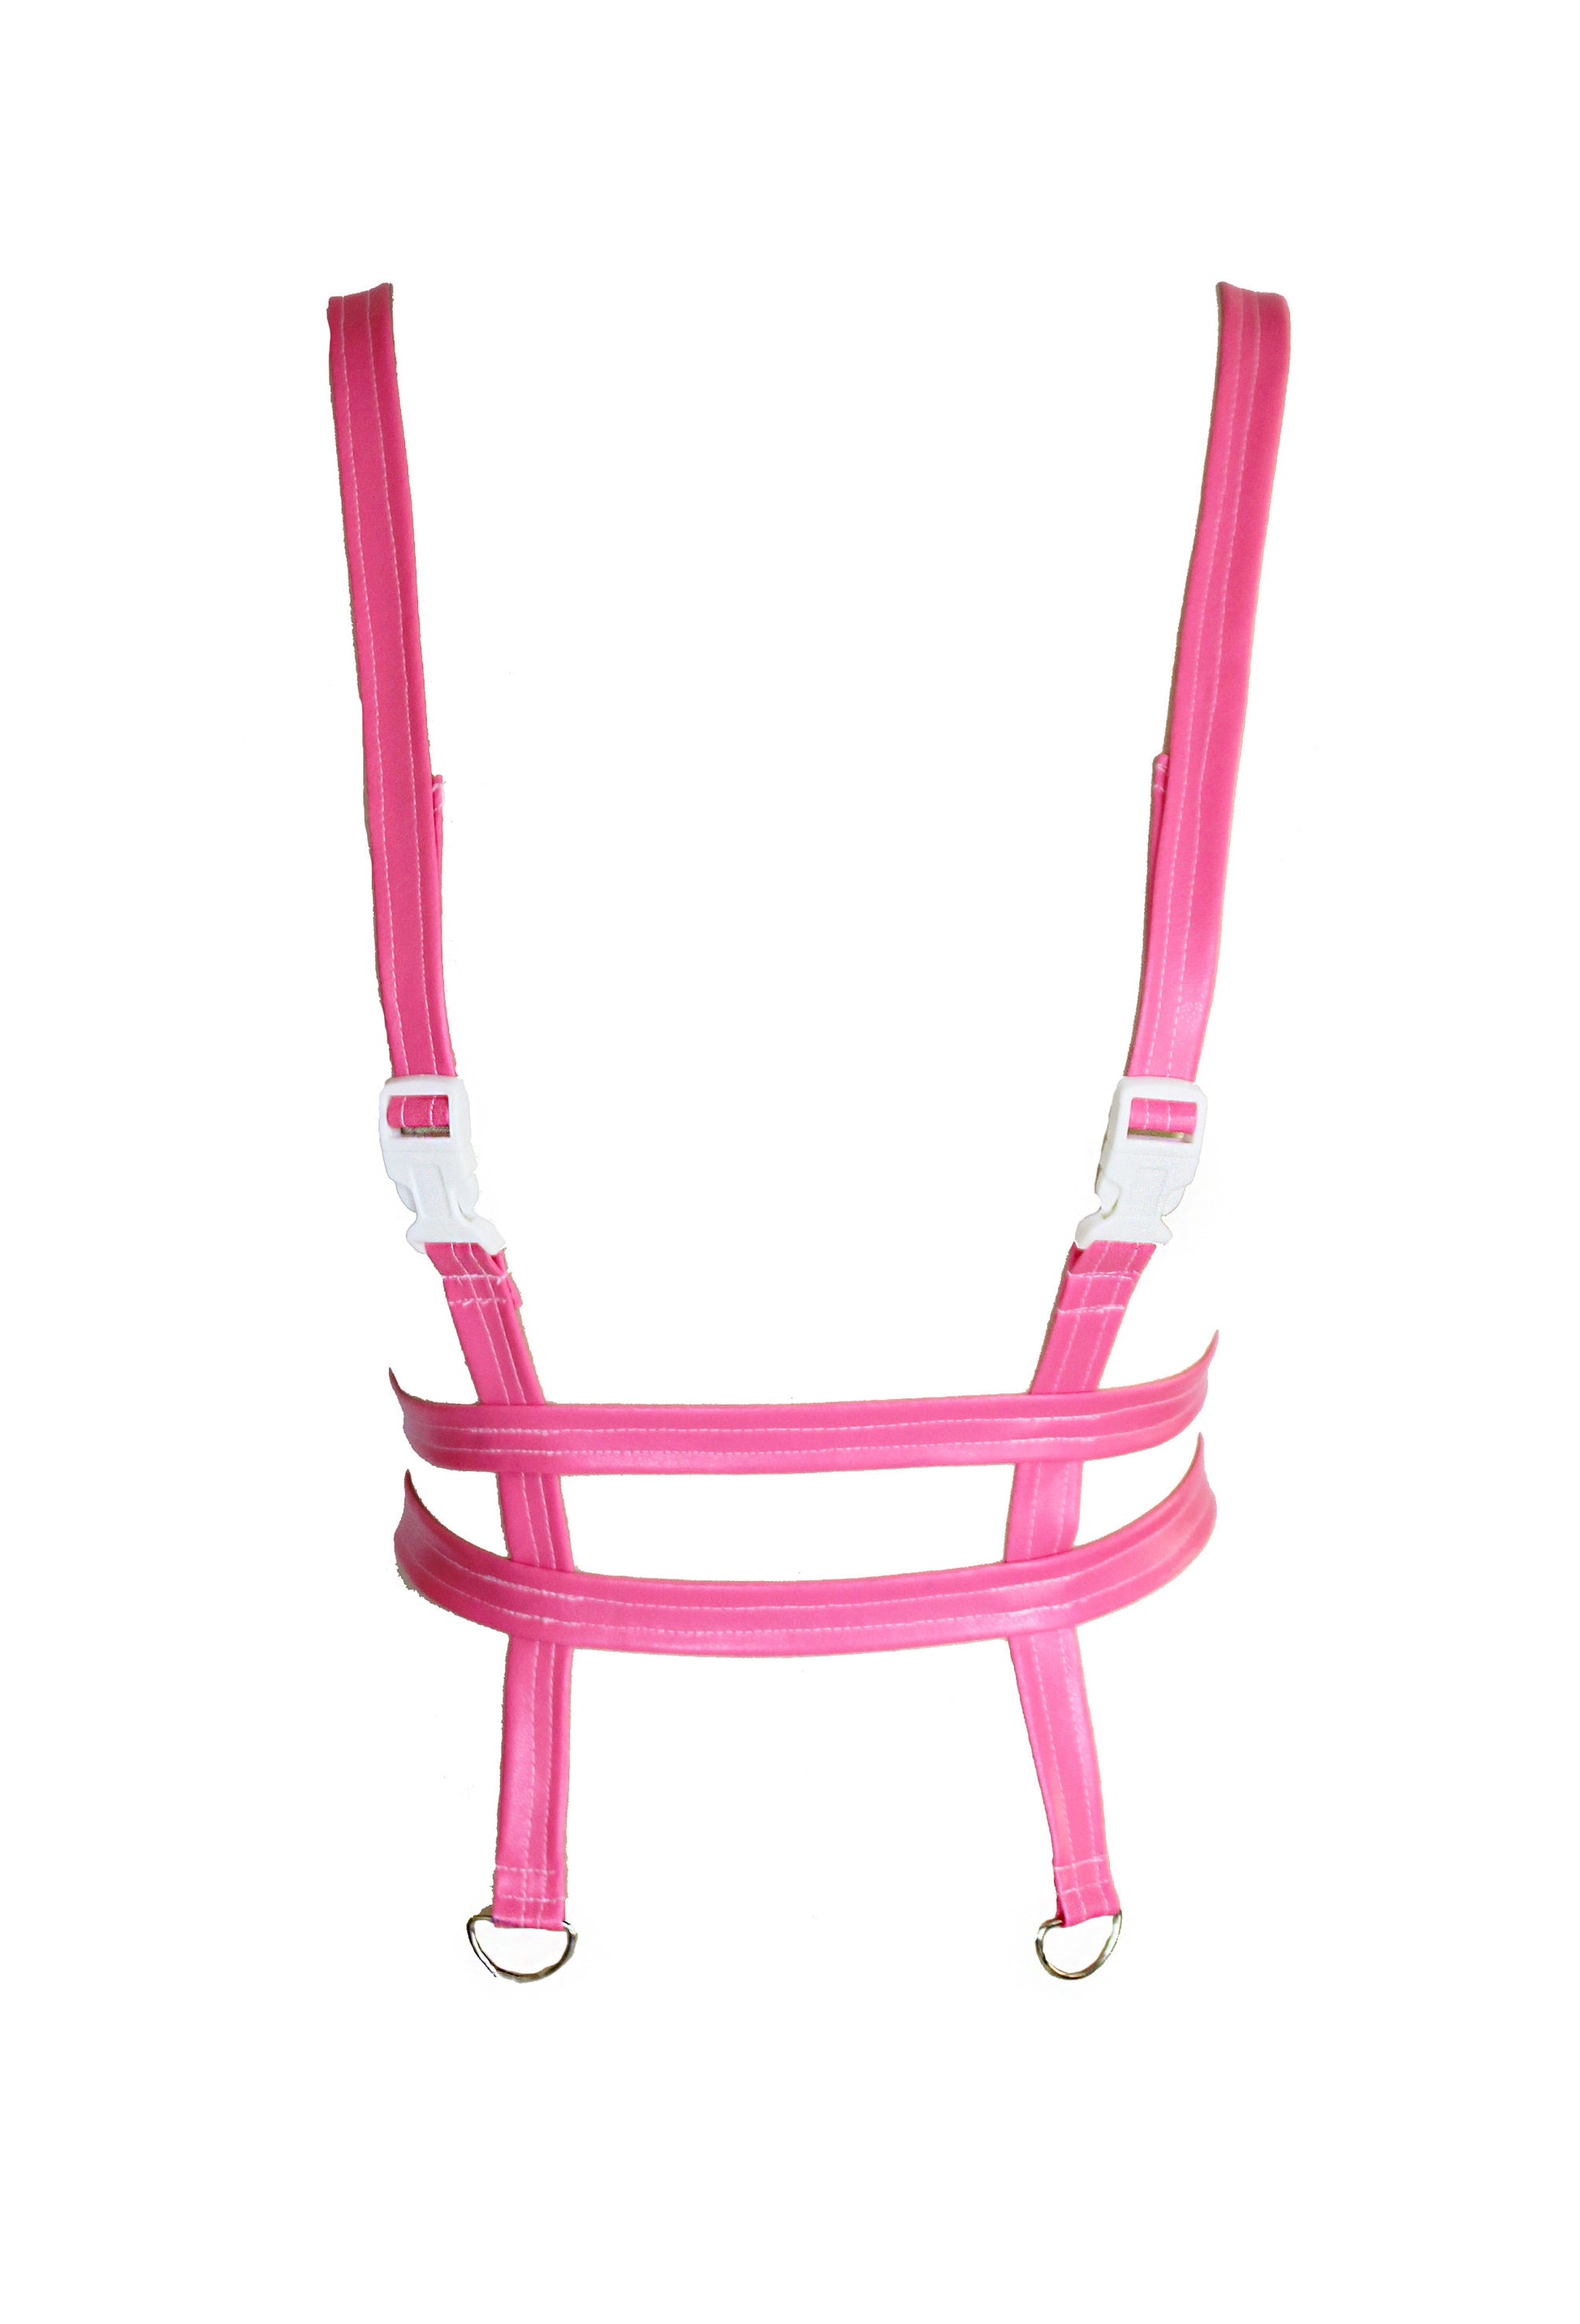 Handmade Hot pink body harness bra | chest harness women vegan leather harness |  bdsm harness goth harness | cyberpunk clothing